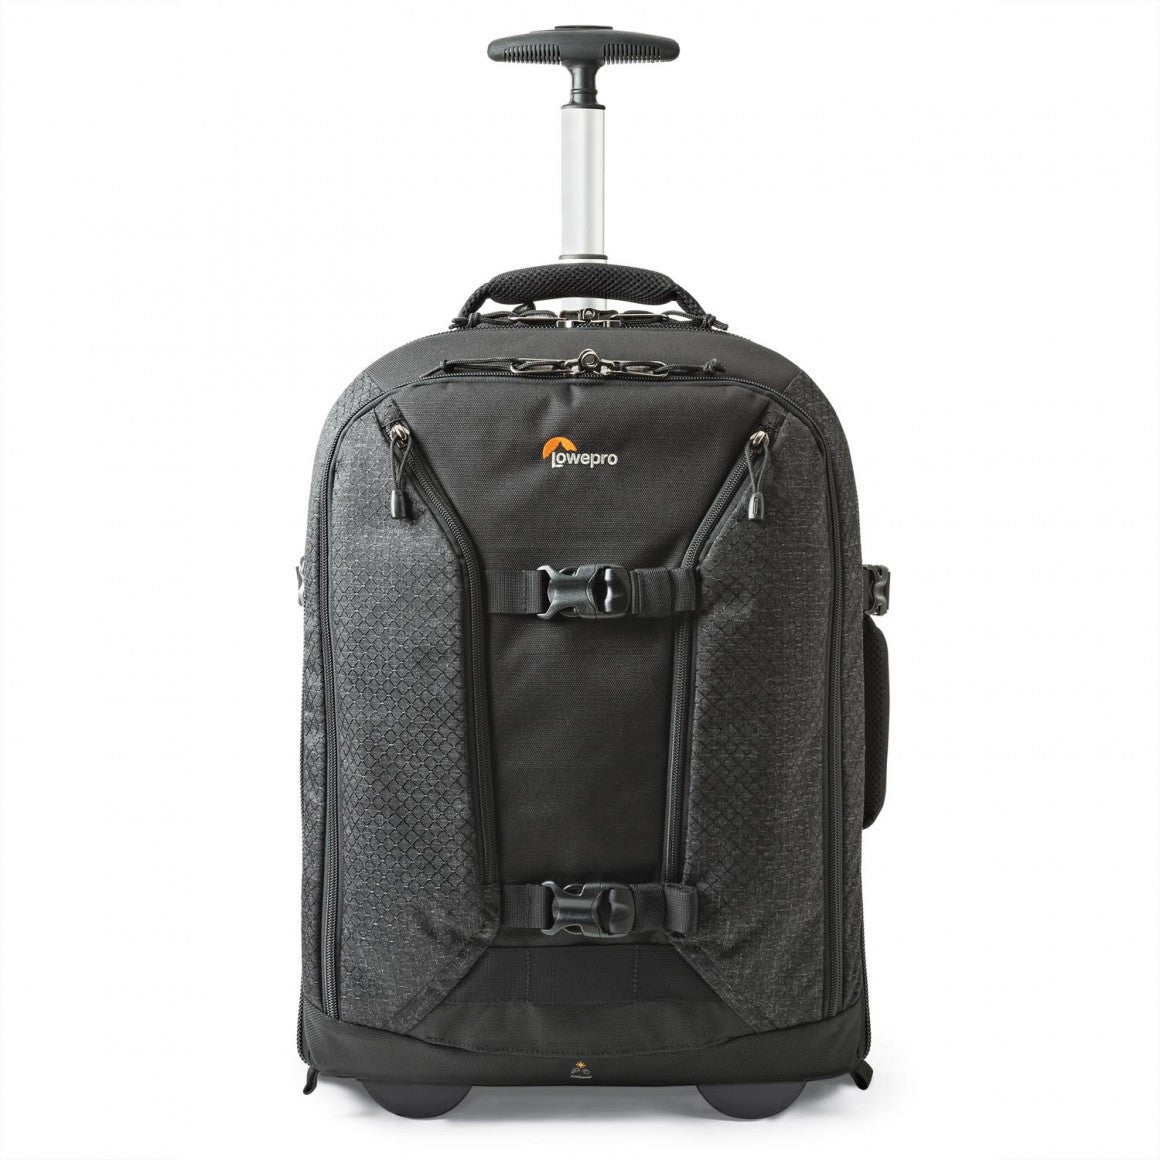 Lowepro Pro Runner RL x450 AW II Backpack (Black), bags roller bags, Lowepro - Pictureline  - 1